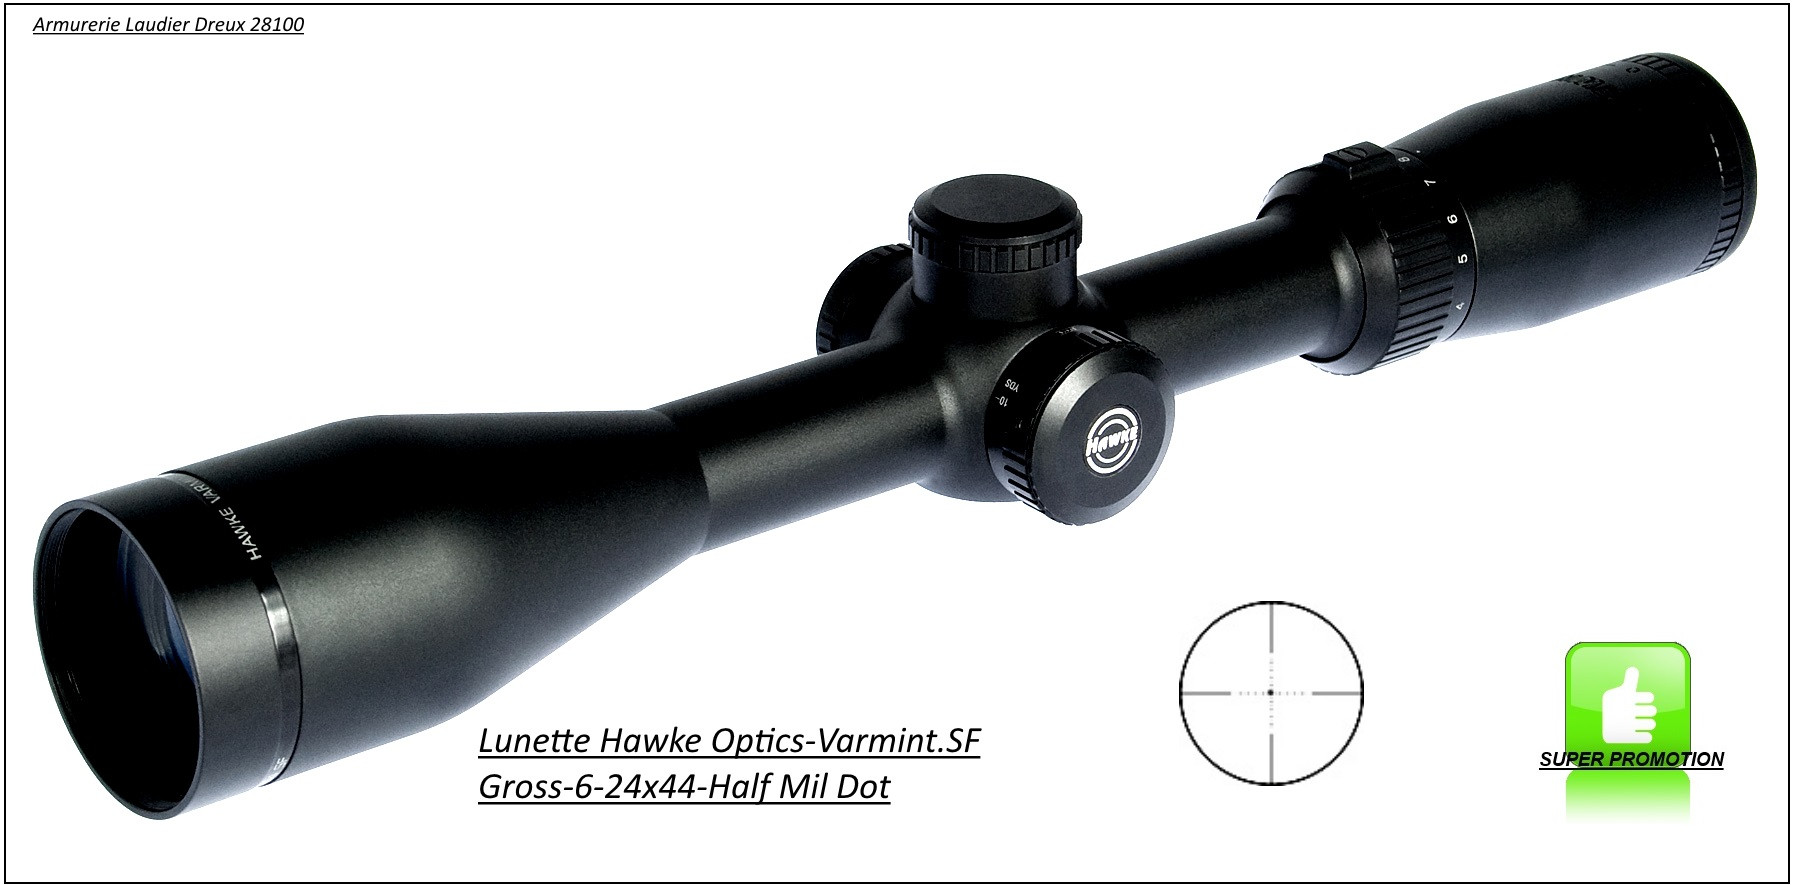 Lunette Hawke Optics Varmint SF-6-24x44-Promotion -Ref 23417